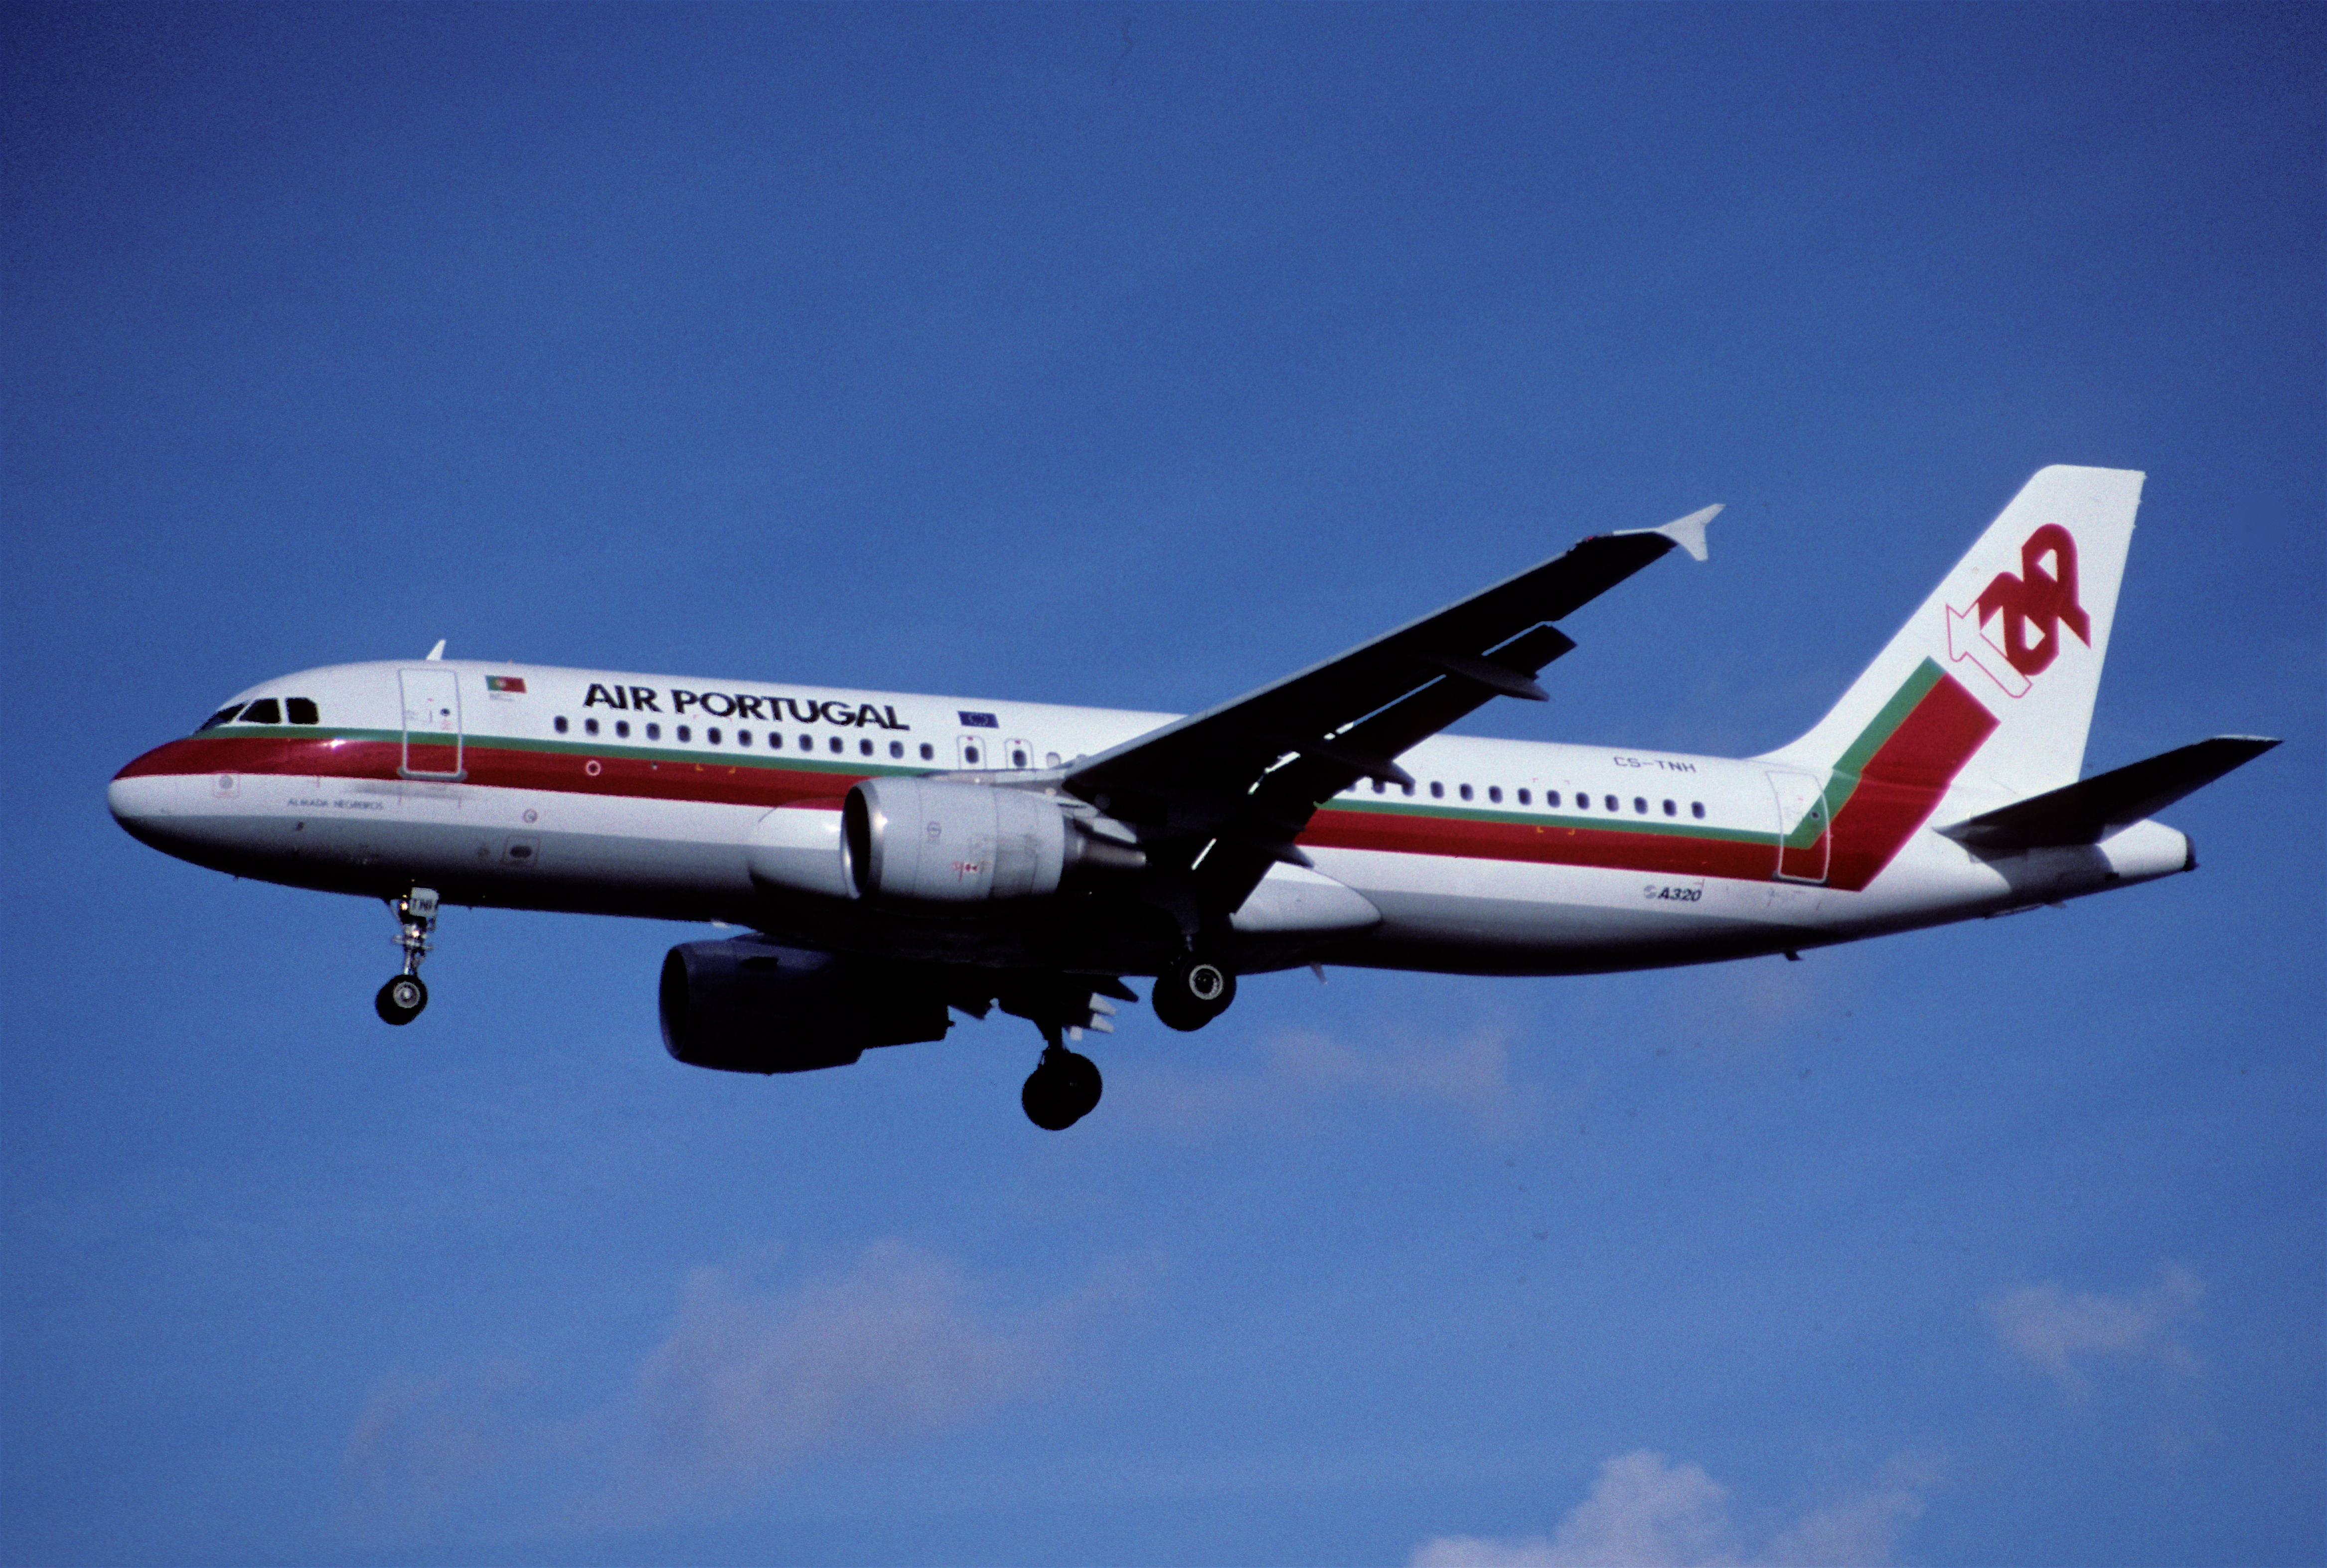 158eg - TAP Air Portugal Airbus A320-214, CS-TNH@LHR,27.10.2001 - Flickr - Aero Icarus